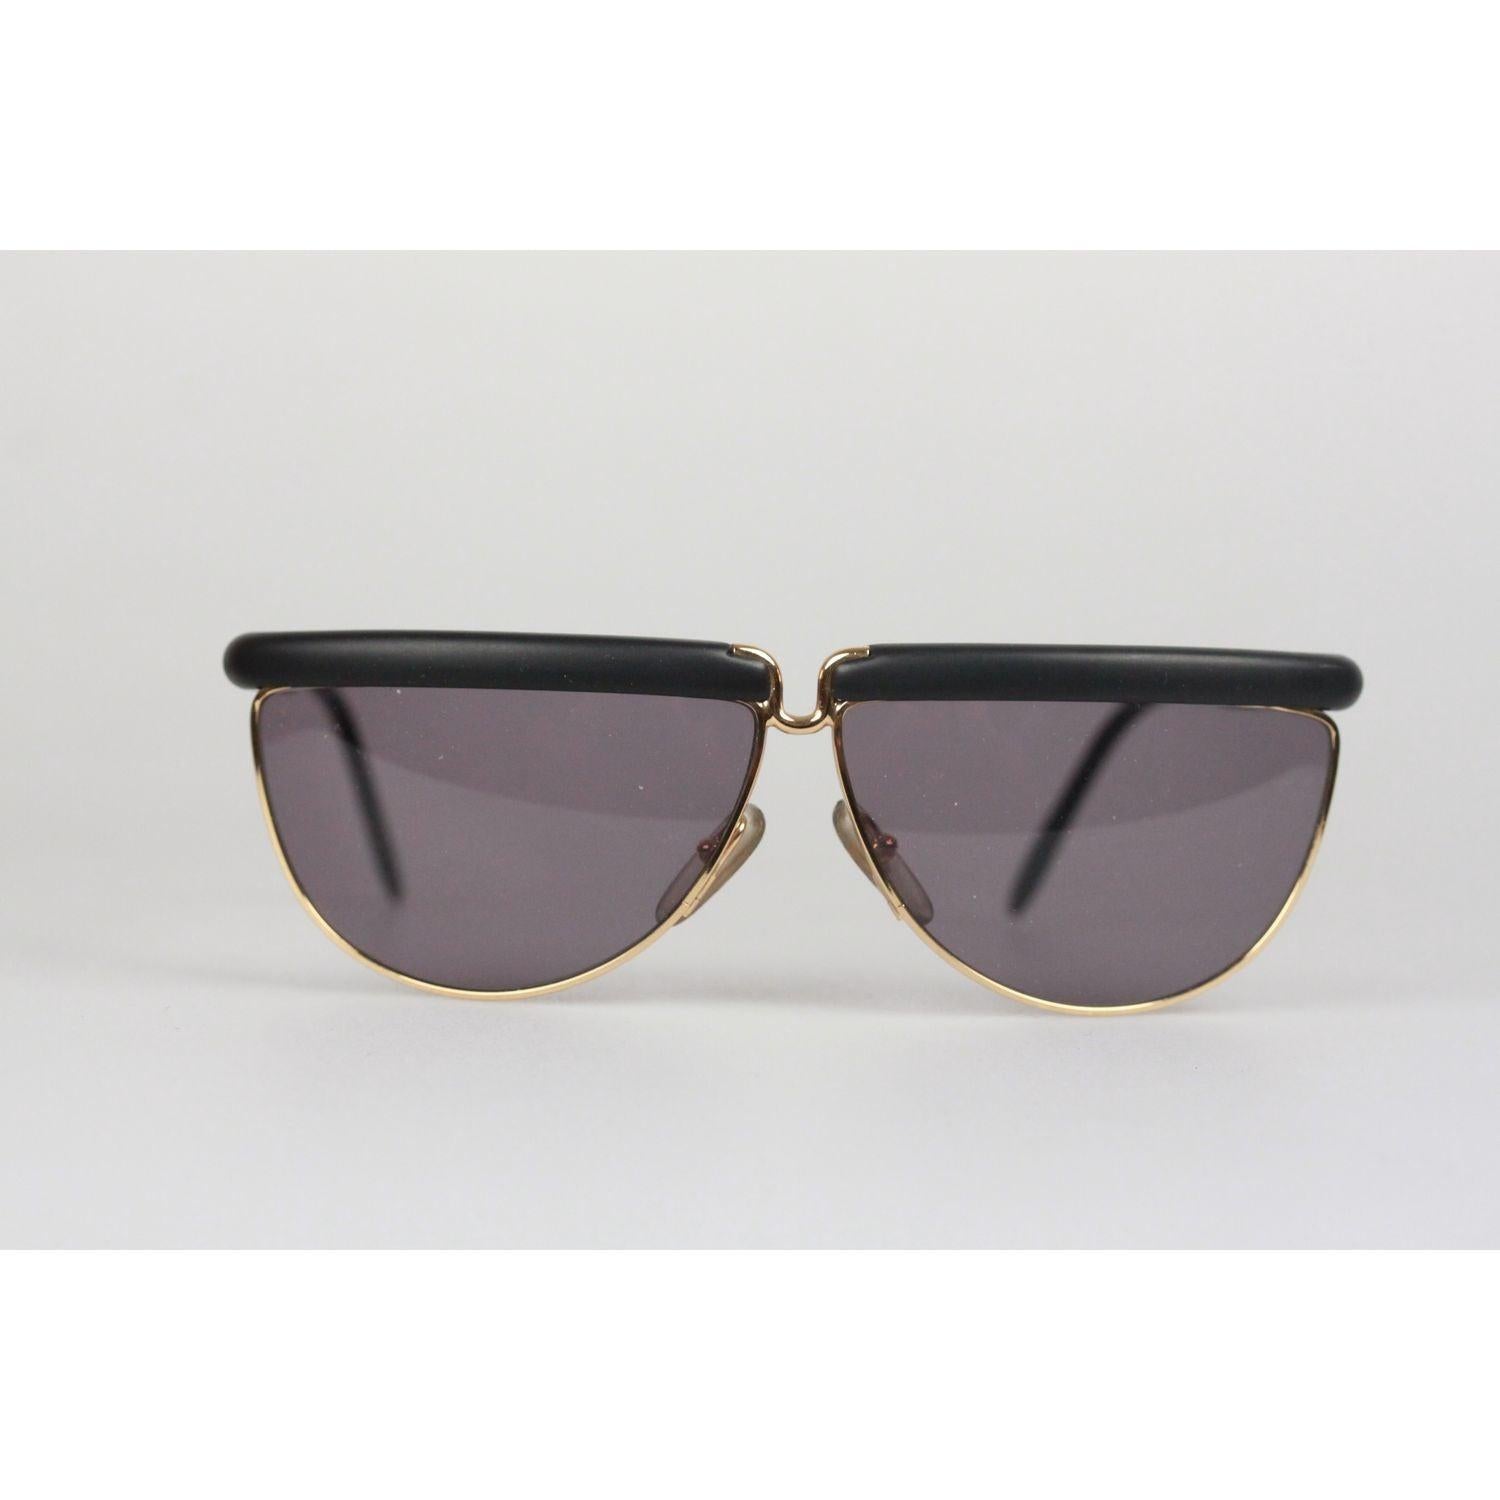 Gianfranco Ferre Vintage Alutanium Sunglasses GFF 30-582 New Old Stock 1